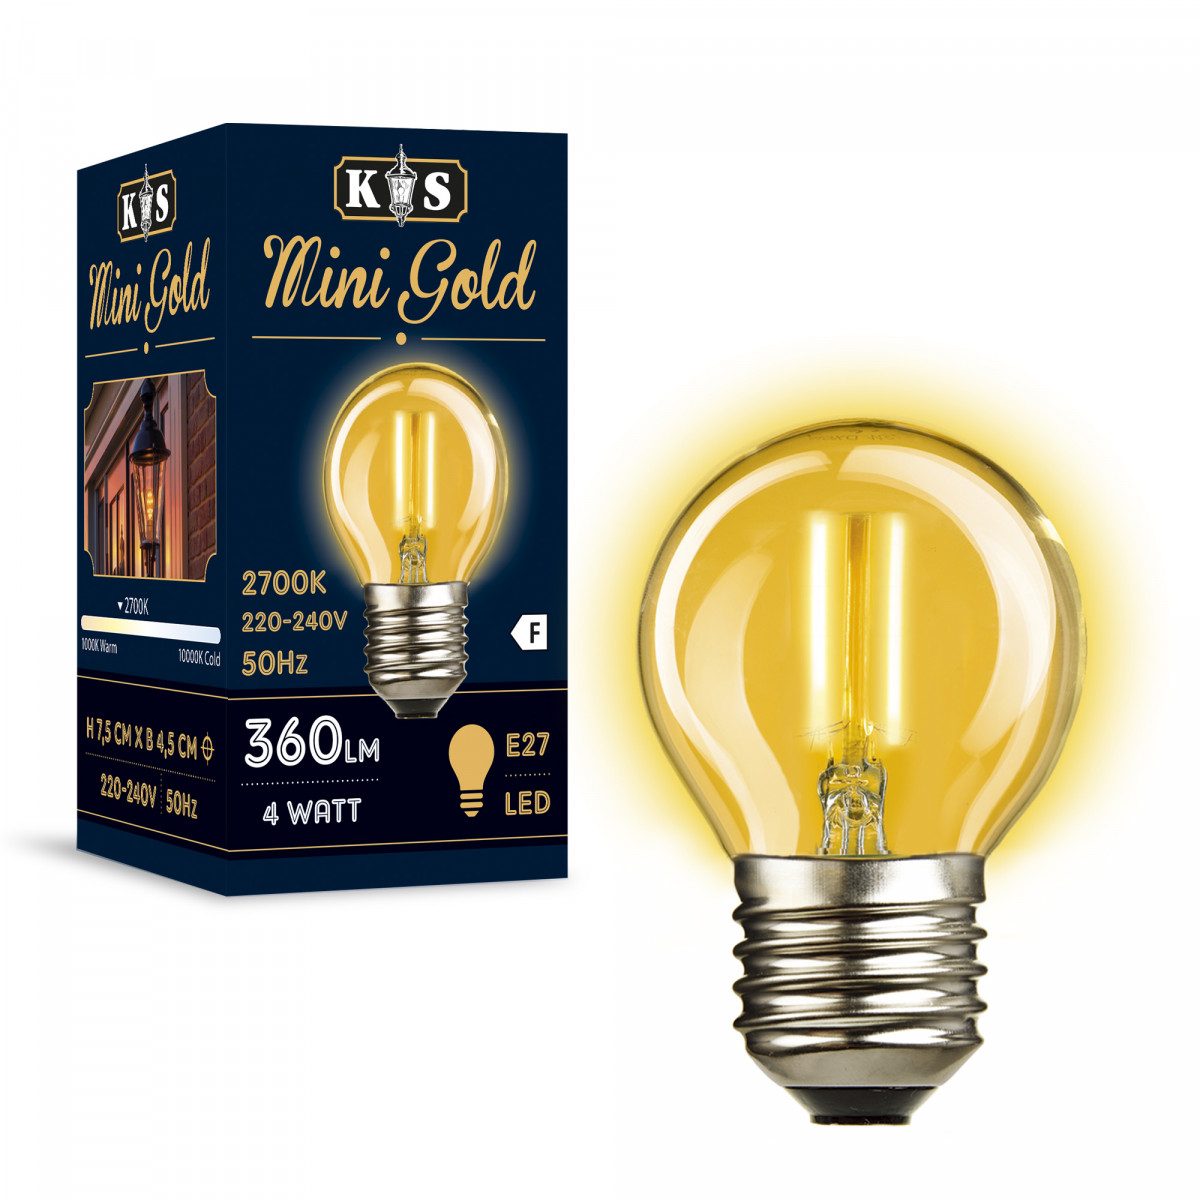 Mini Gold LED 4W